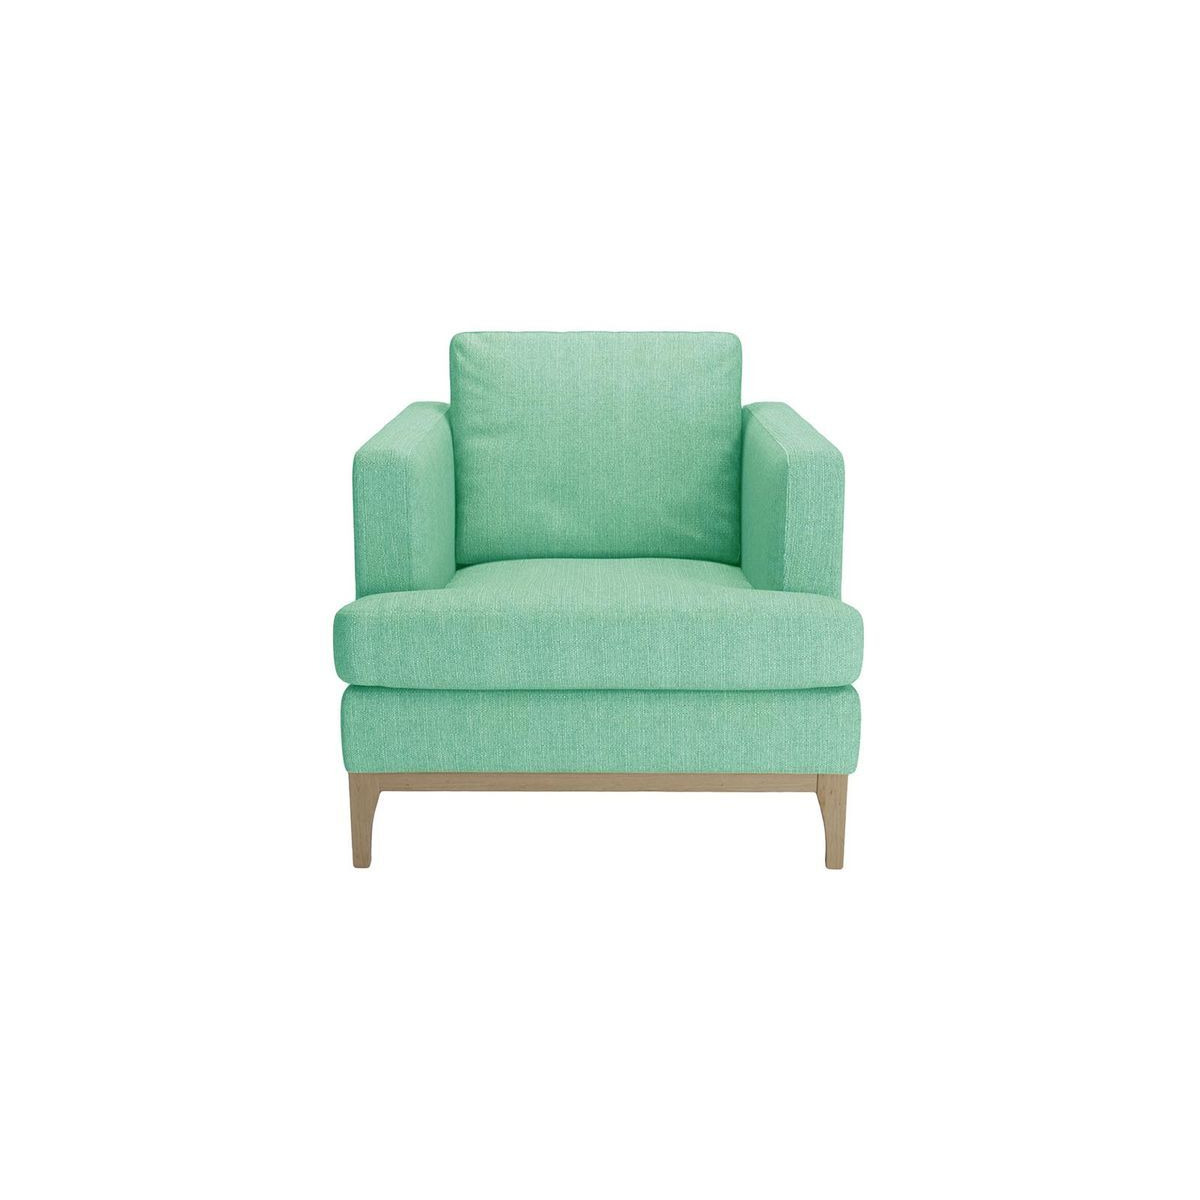 Scarlett Structured Armchair, turquoise, Leg colour: wax black - image 1